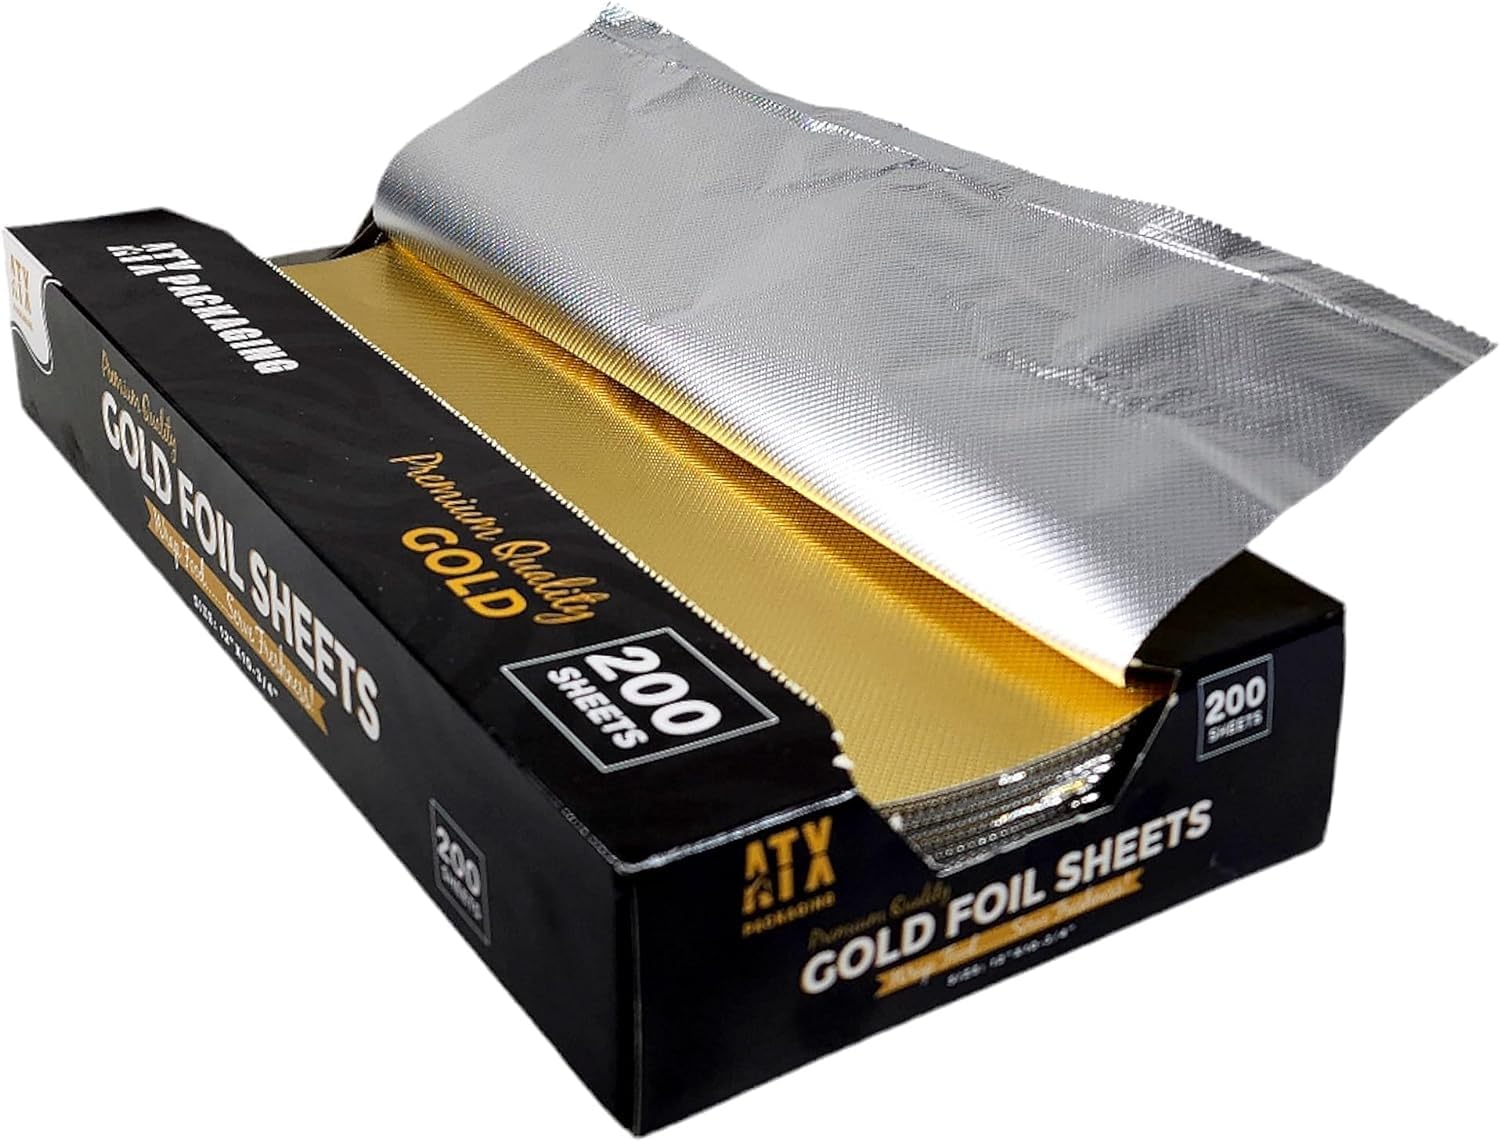 ATX 12" x 10.75" Gold Pop-Up Foil Sheets 12 x 200/CS